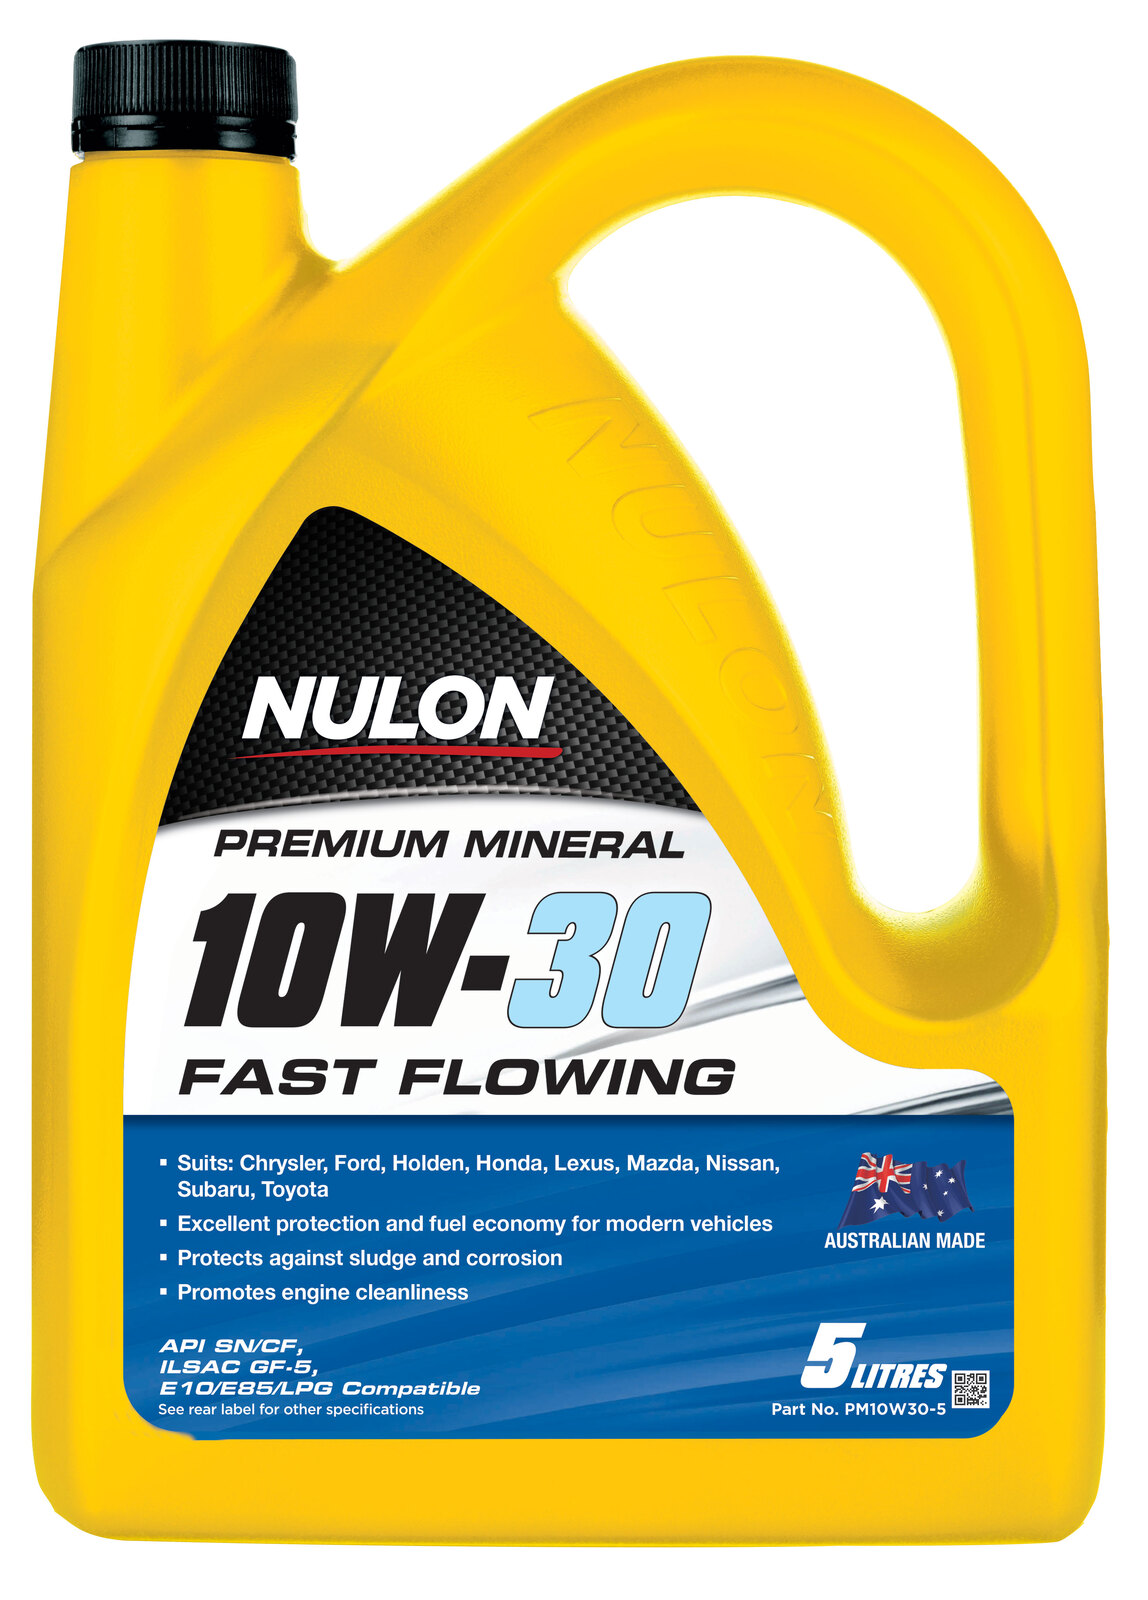 NULON Premium Mineral 10W30 Engine Oil 5L, Each